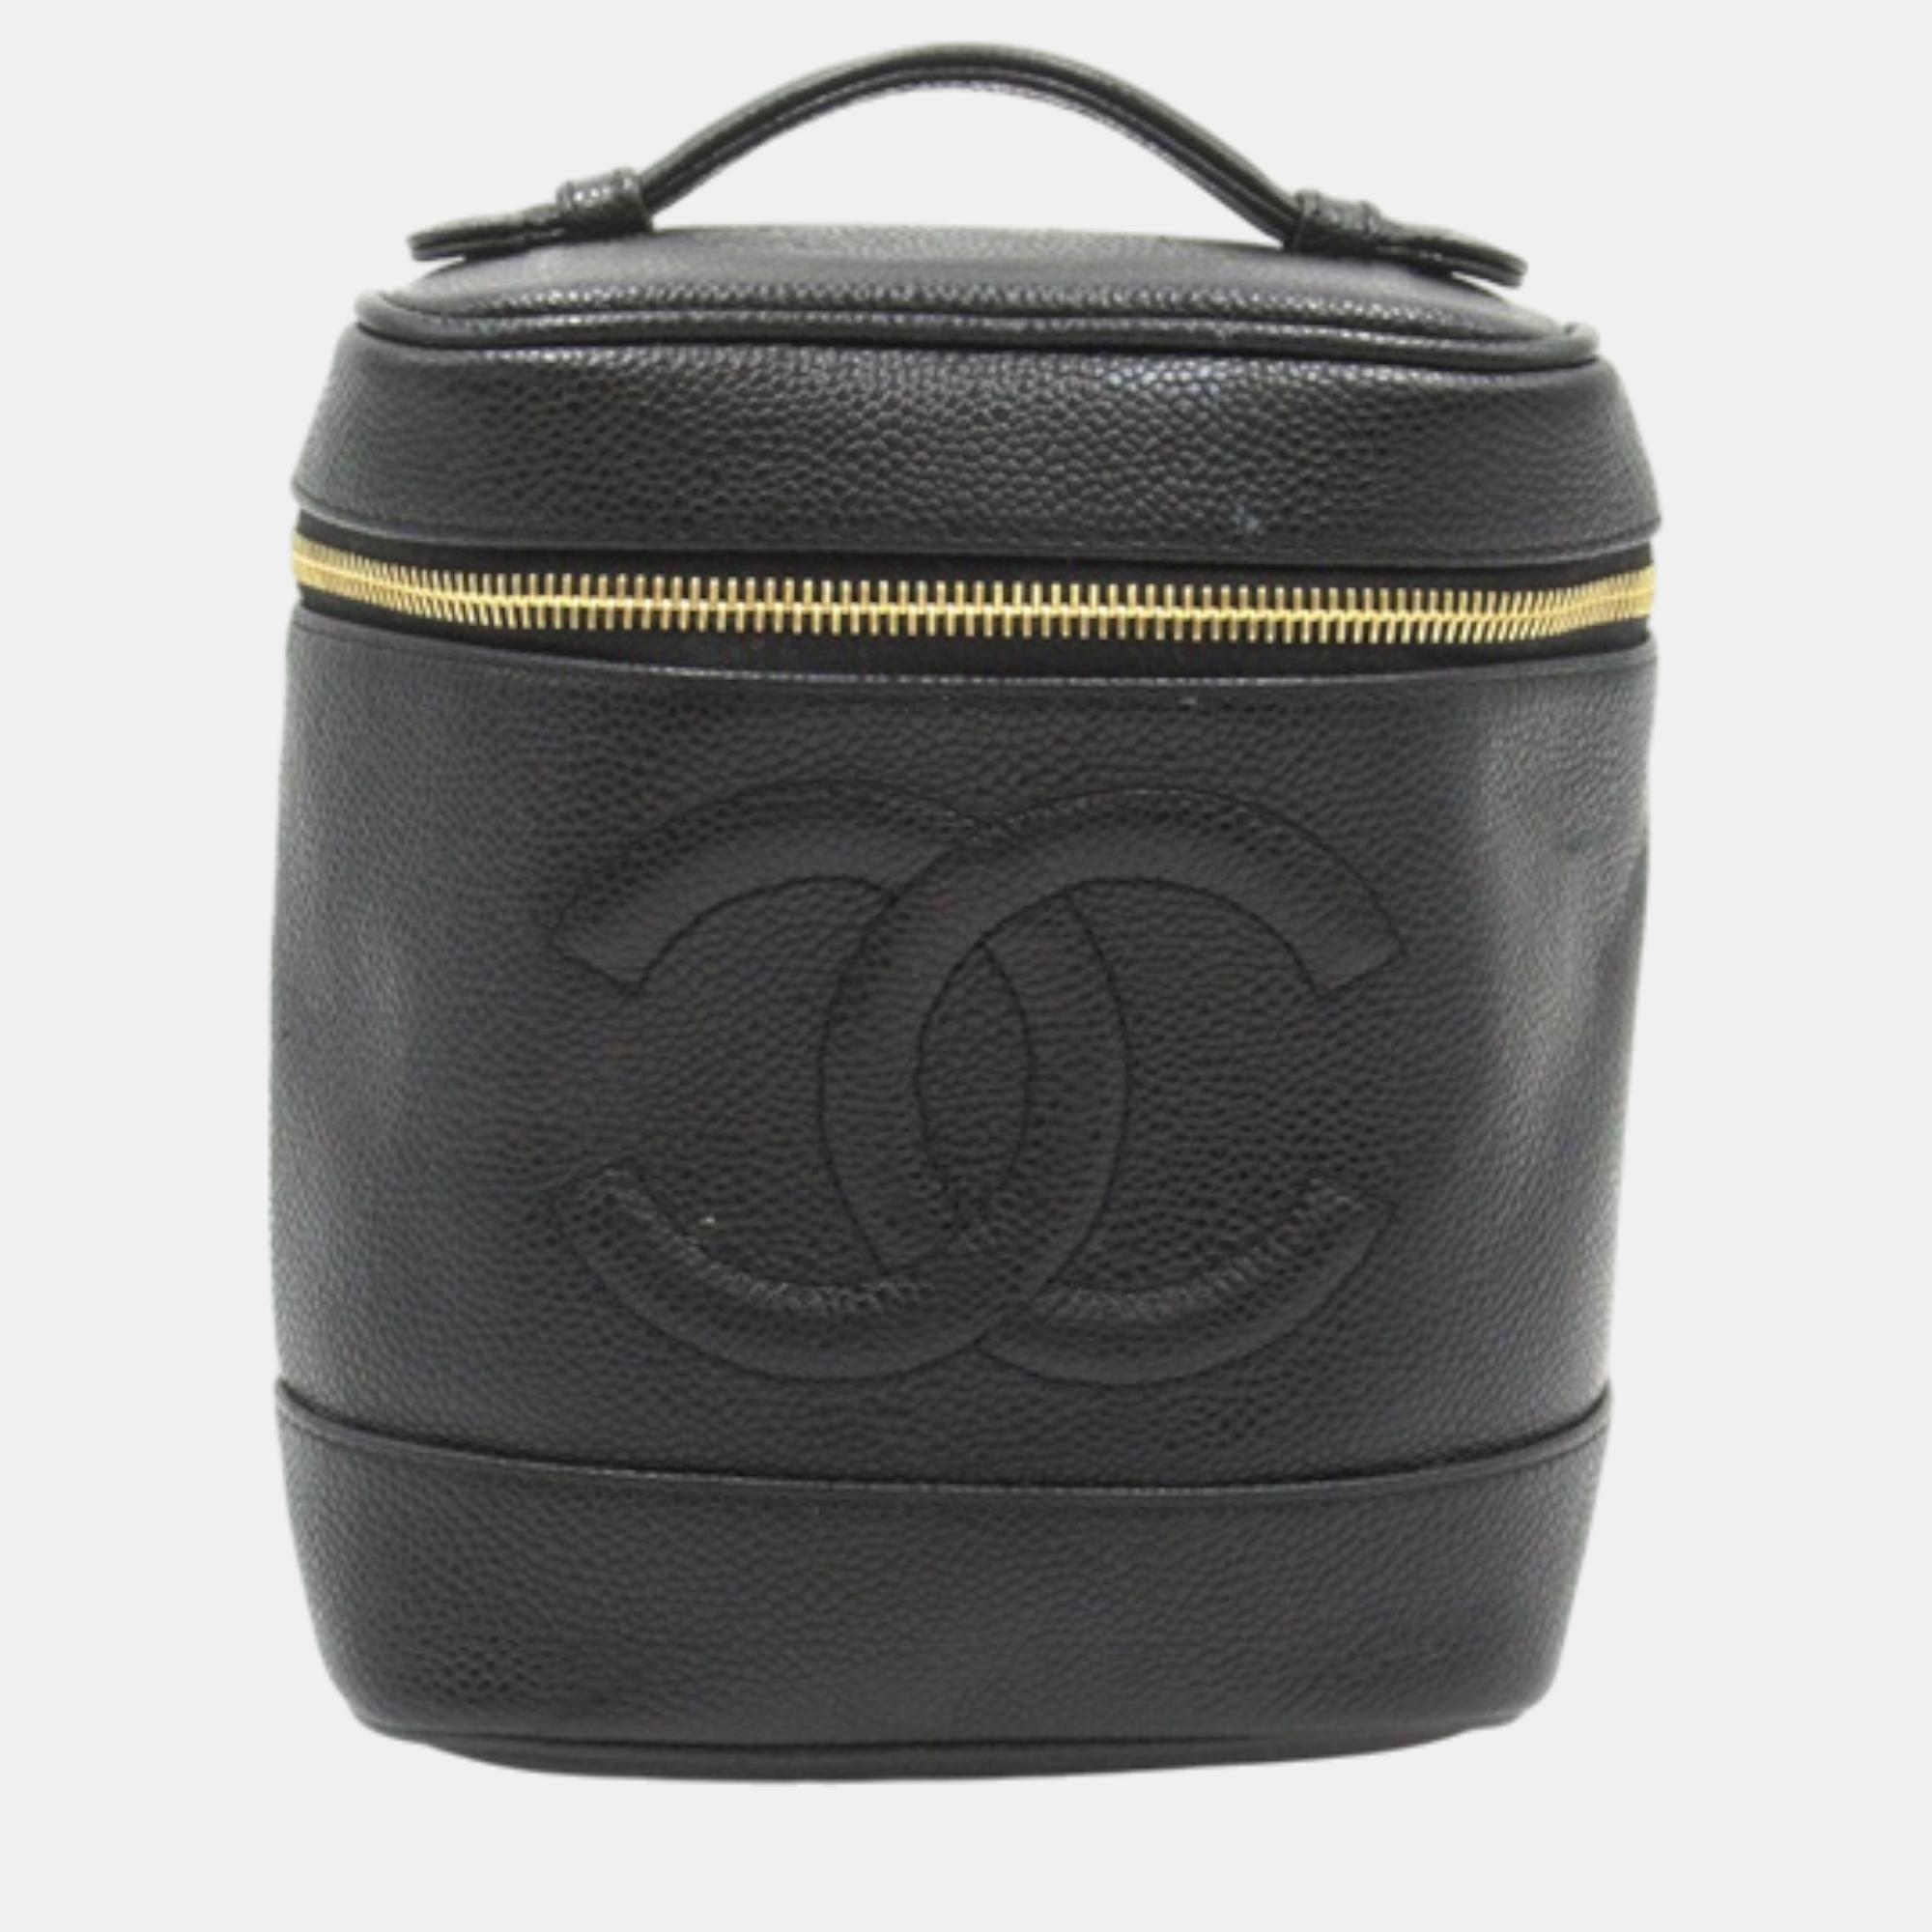 Chanel black leather cc caviar vanity case